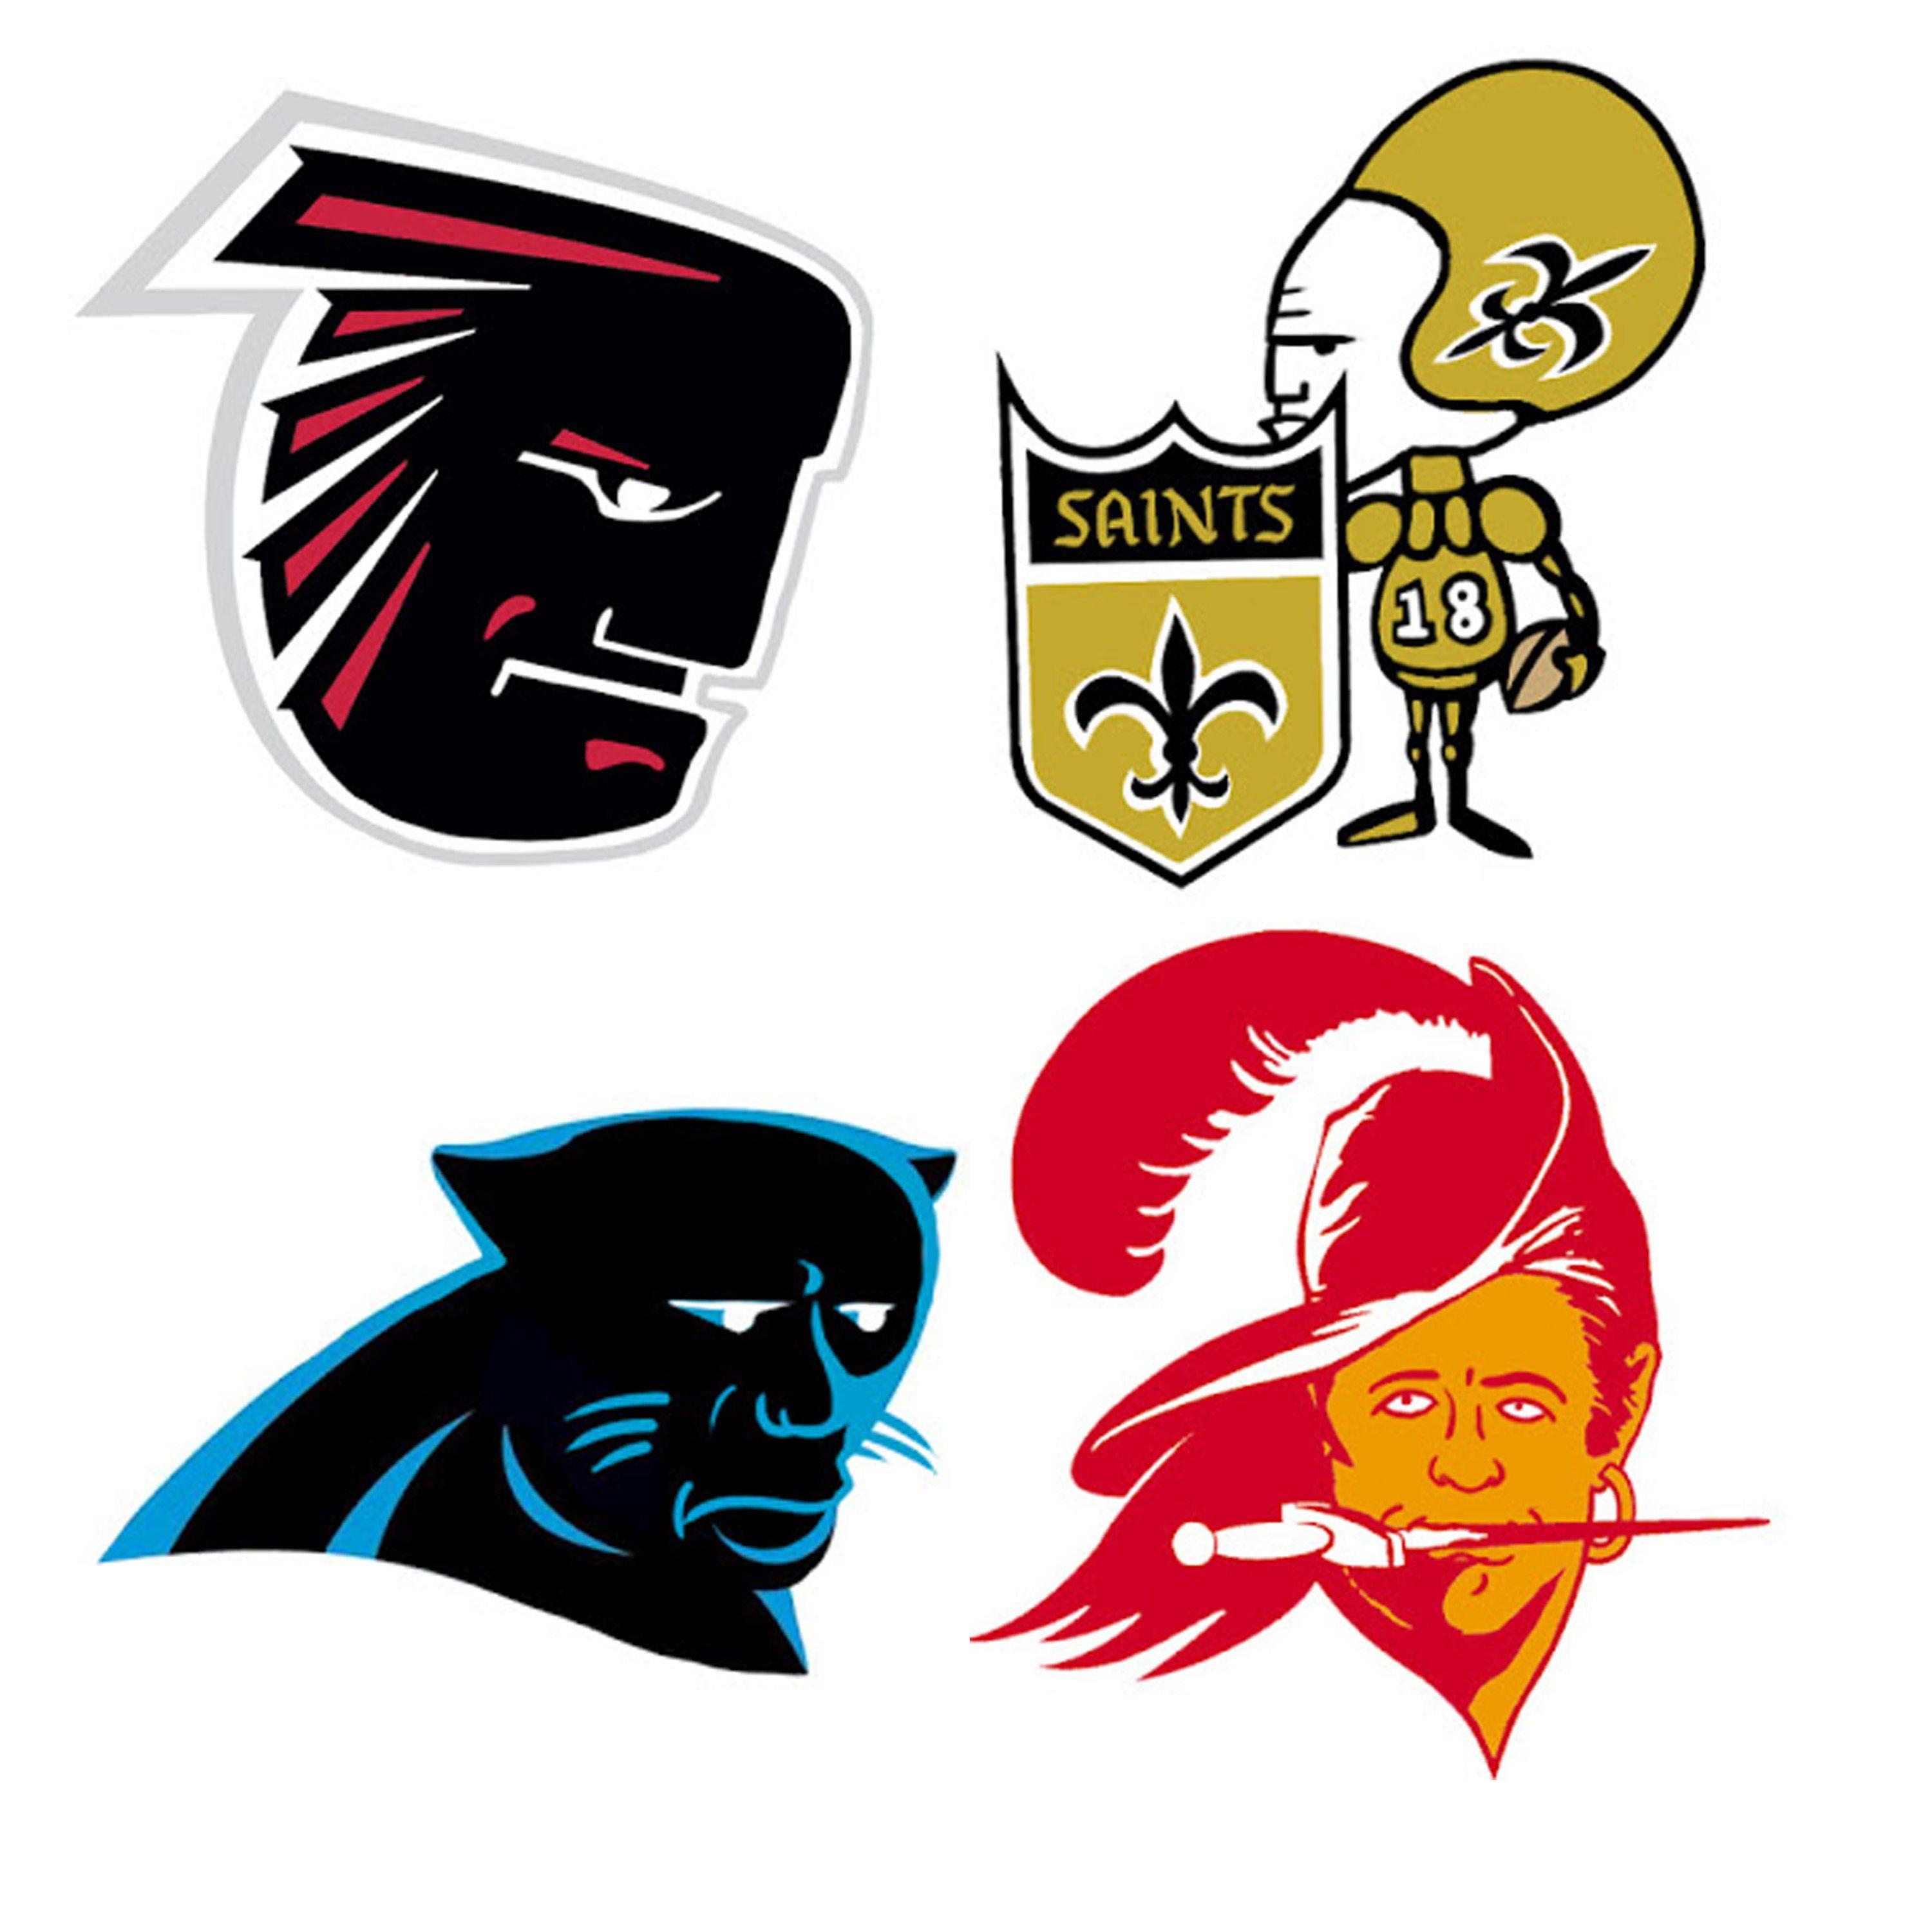 Funny NFL Logo - Funny Football Logos. donald trump takes over 7 funny nfl team logos